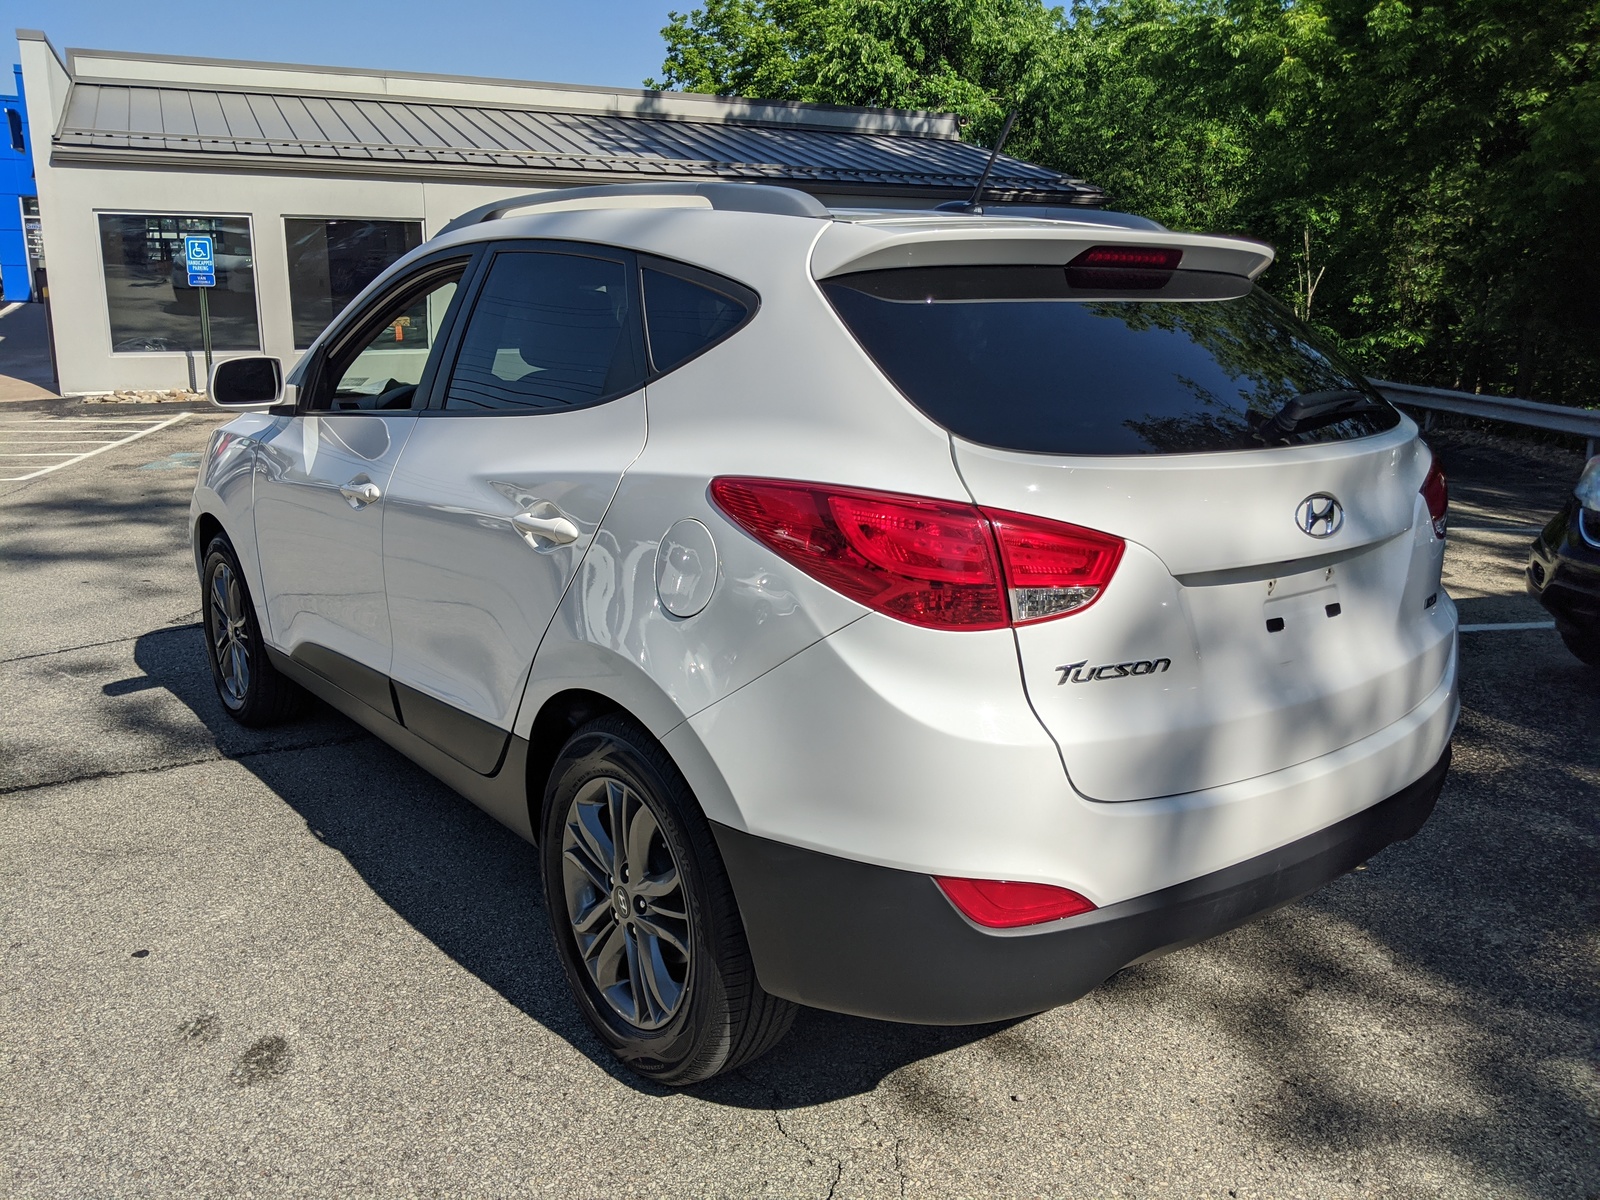 PreOwned 2015 Hyundai Tucson SE in Winter White Solid